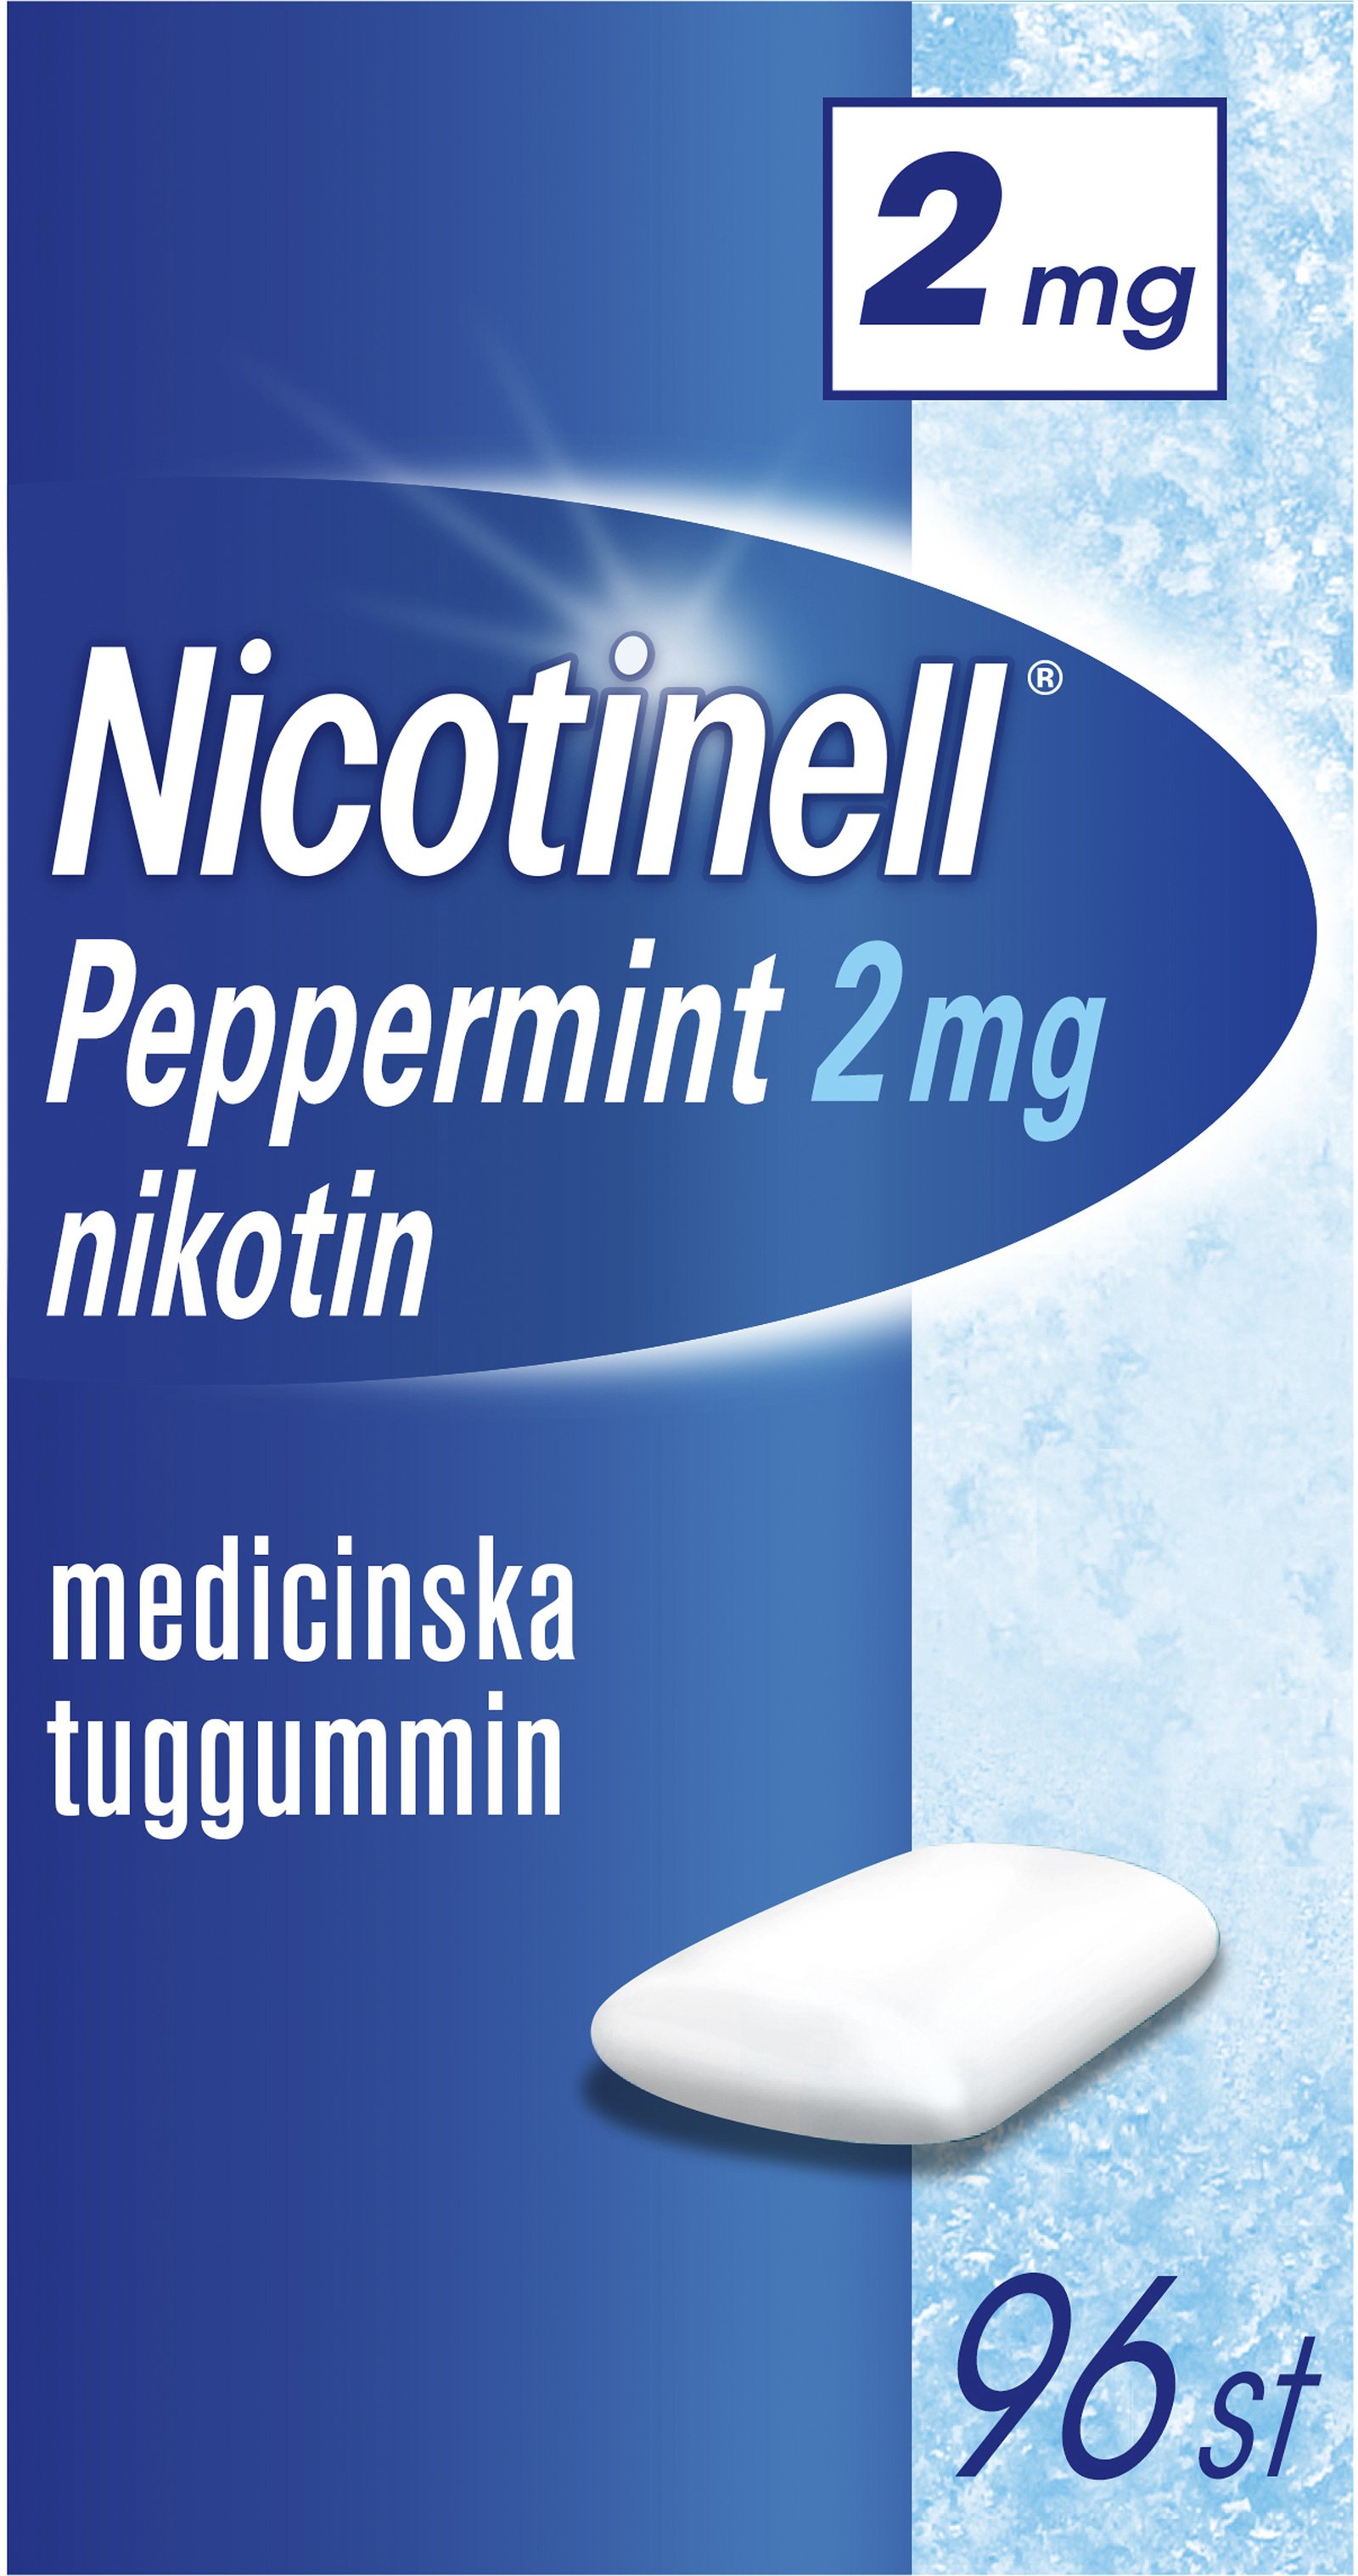 Nicotinell Peppermint 2 mg Nikotin Medicinska tuggummin 96 st